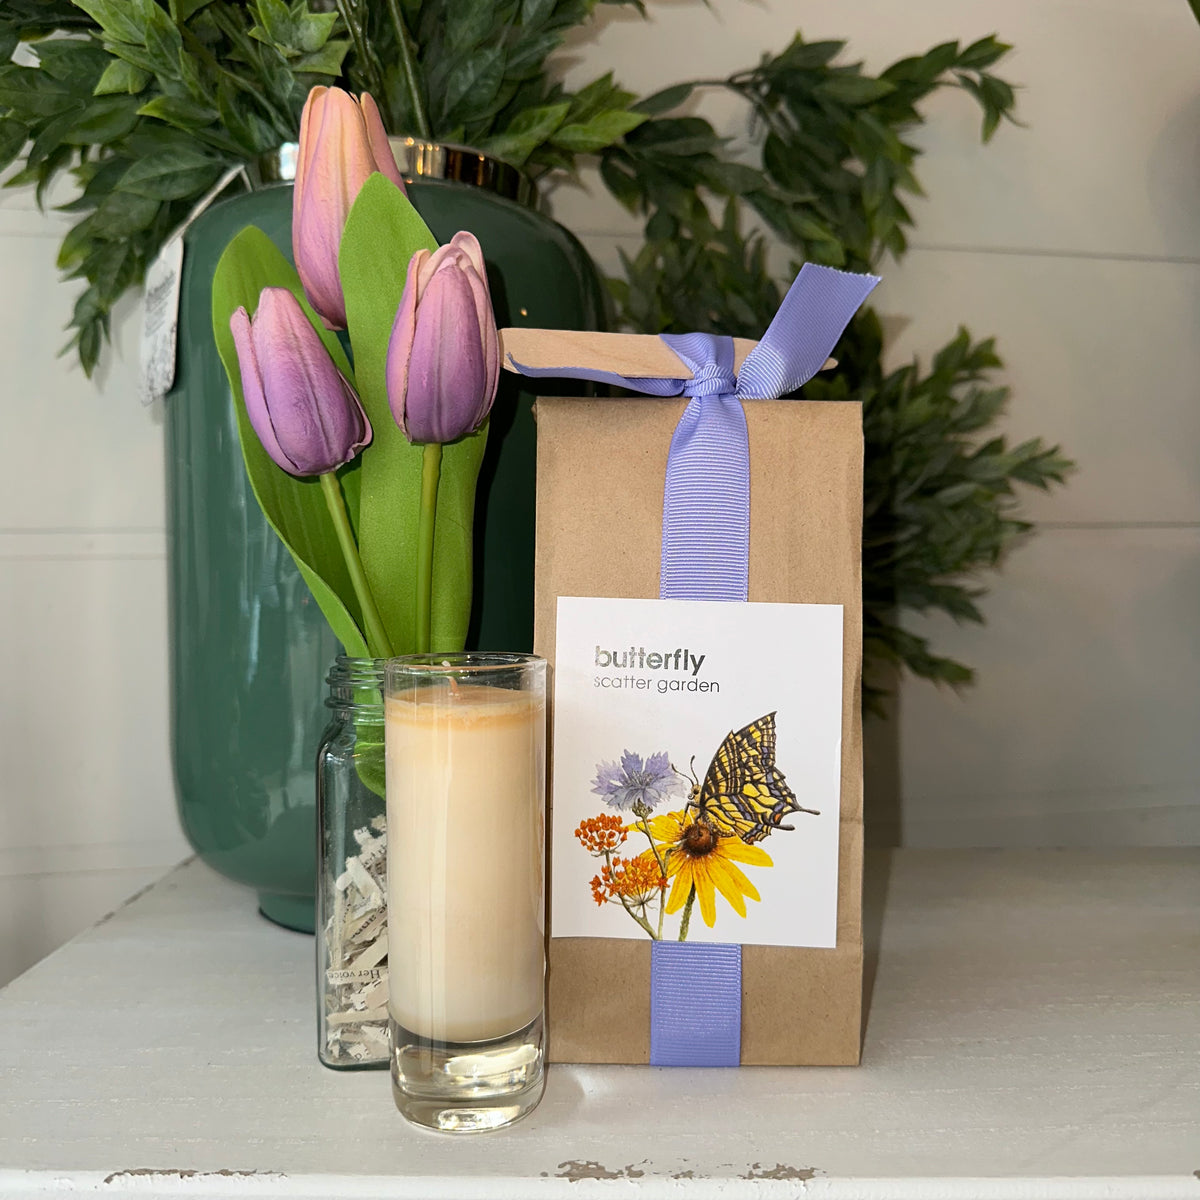 Butterfly Scatter Garden {Gift Box}